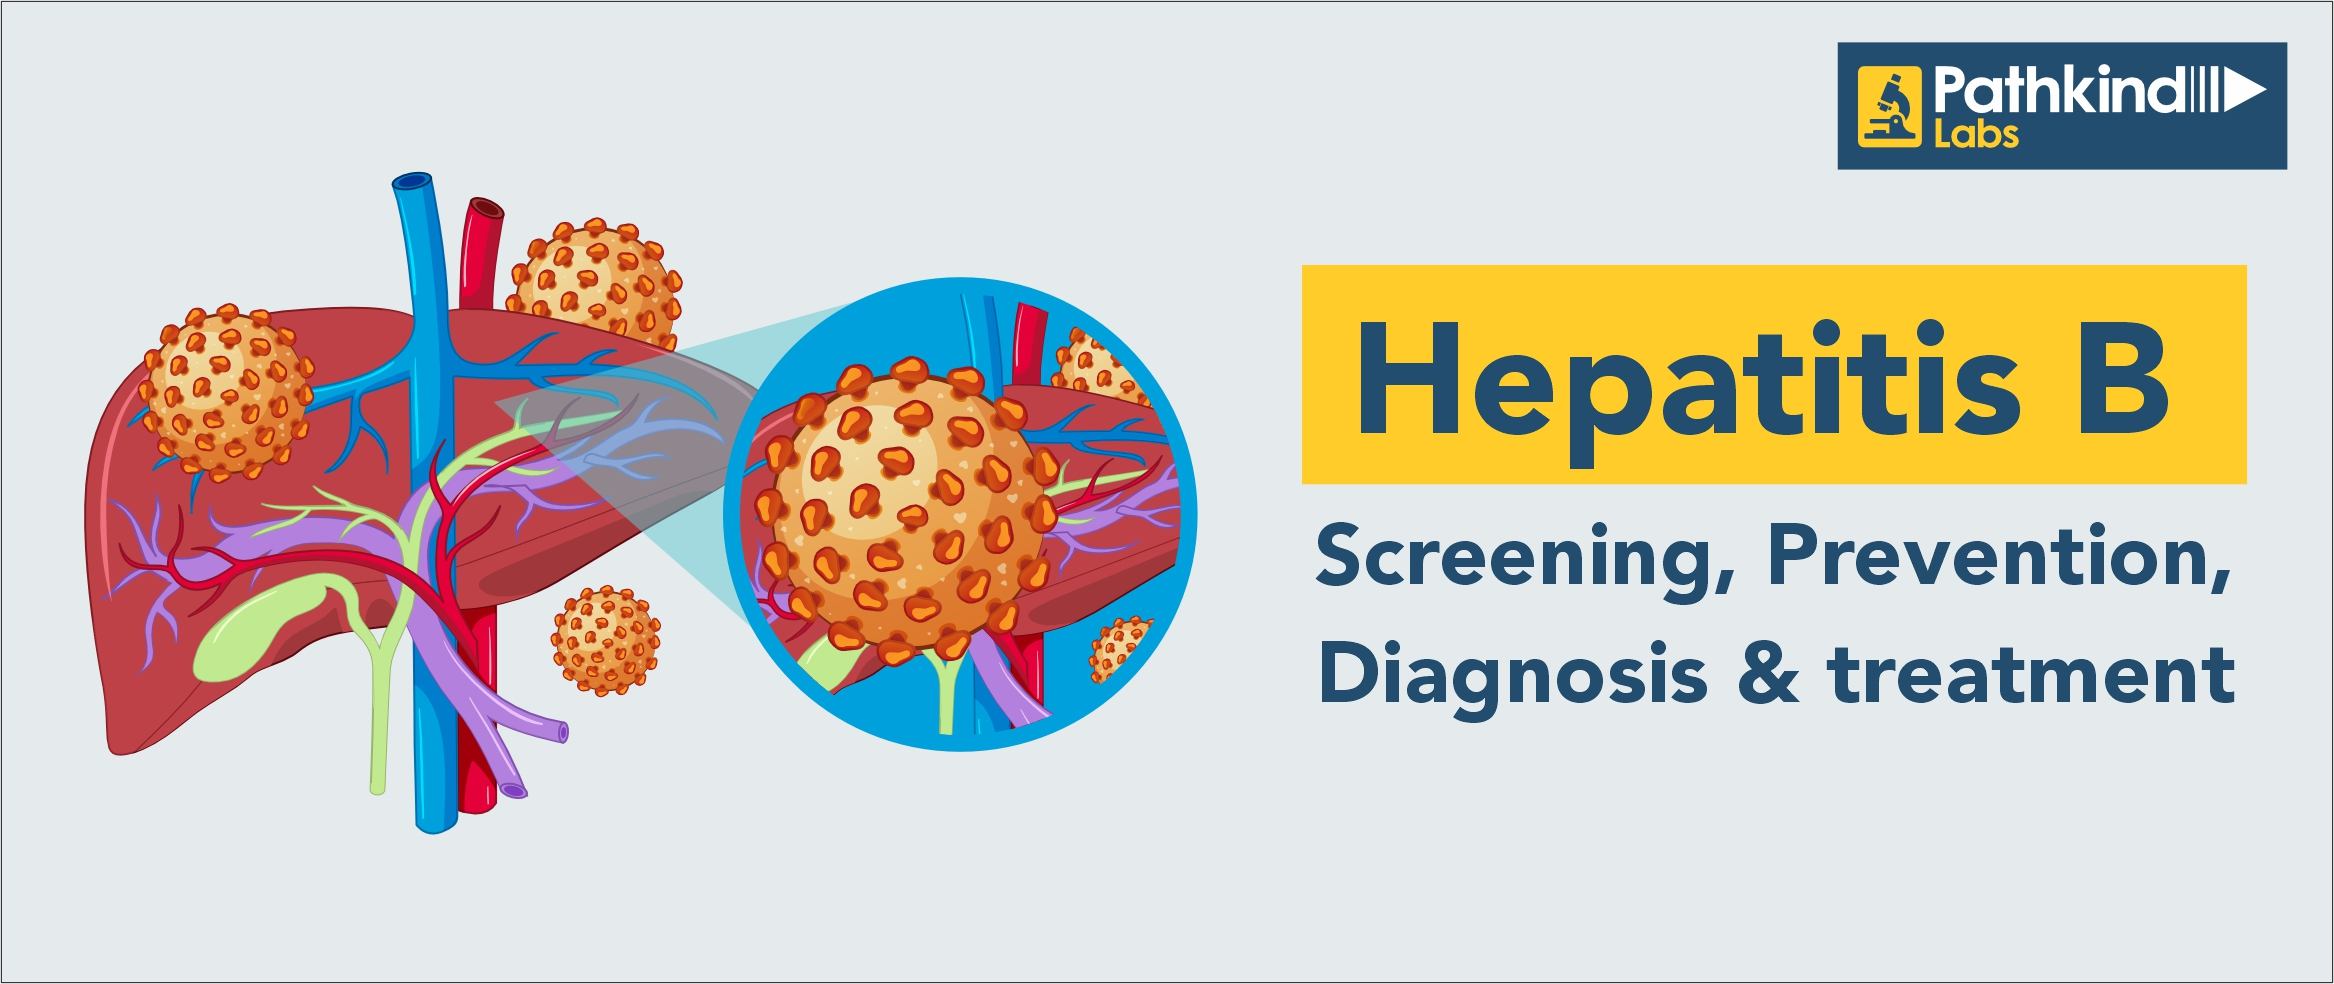 Hepatitis B - Screening, Prevention, Diagnosis & Treatment